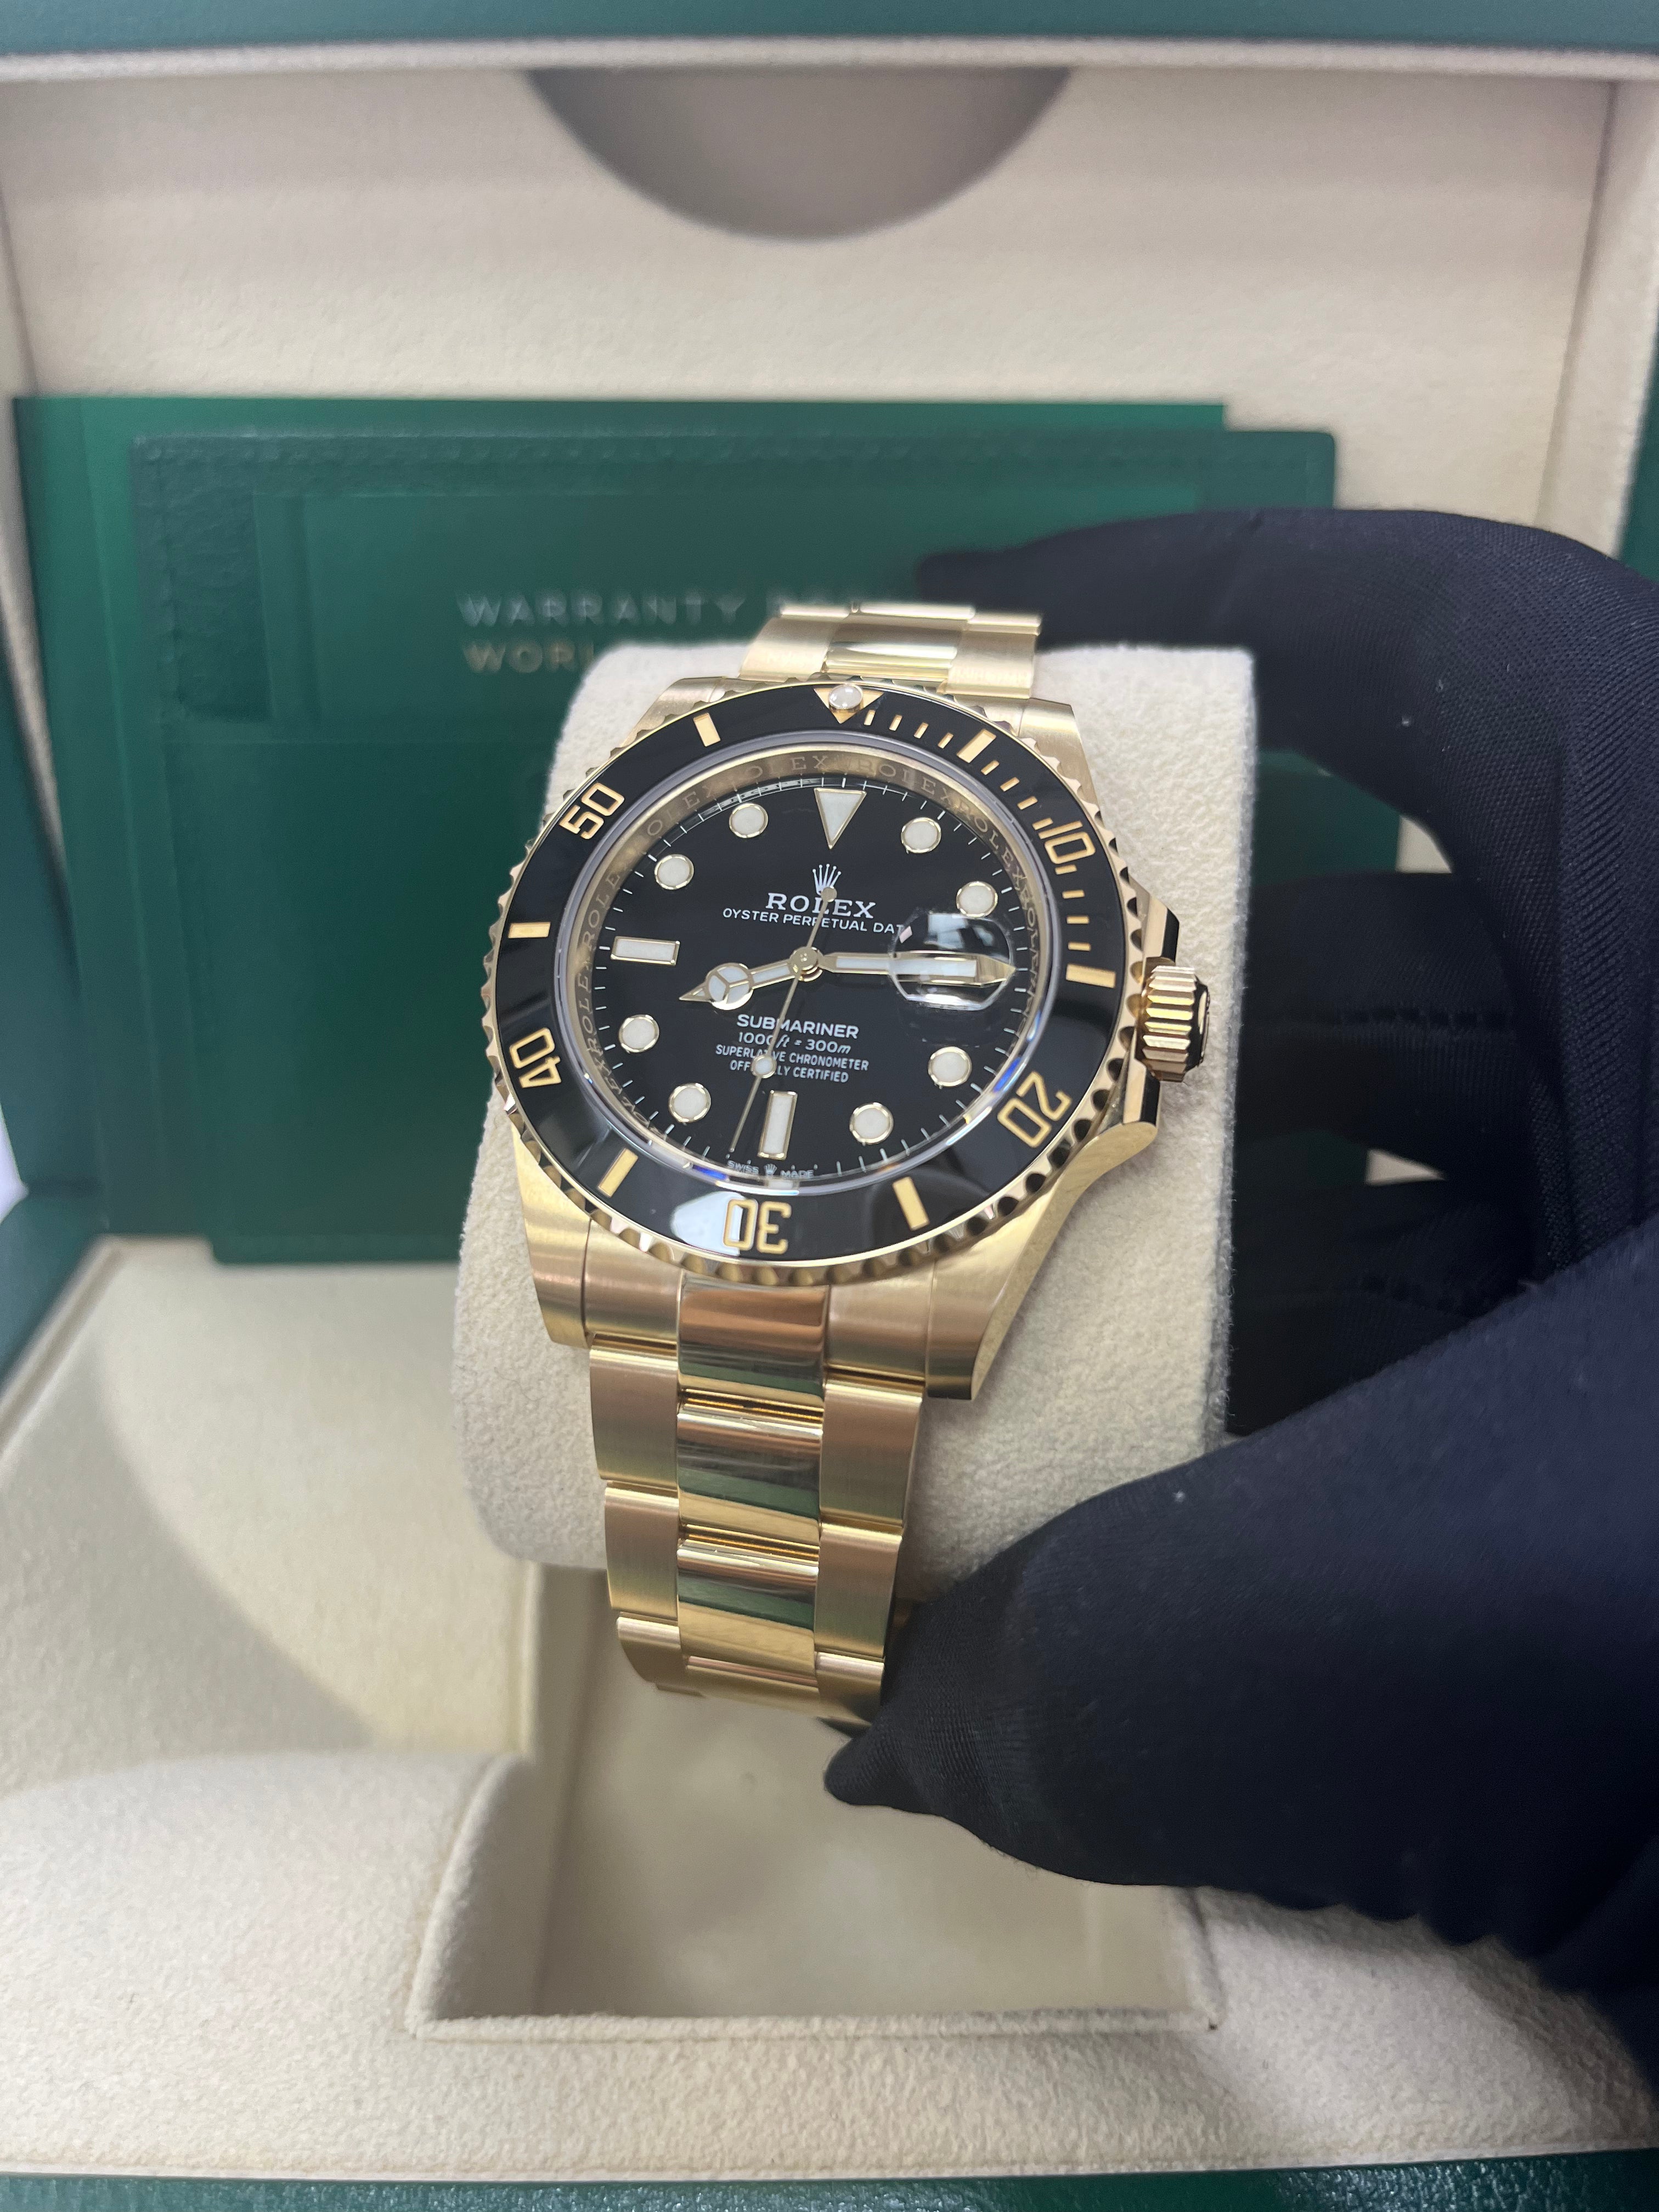 Rolex Yellow Gold Submariner Date Watch - Black Dial (Ref # 126618LN)